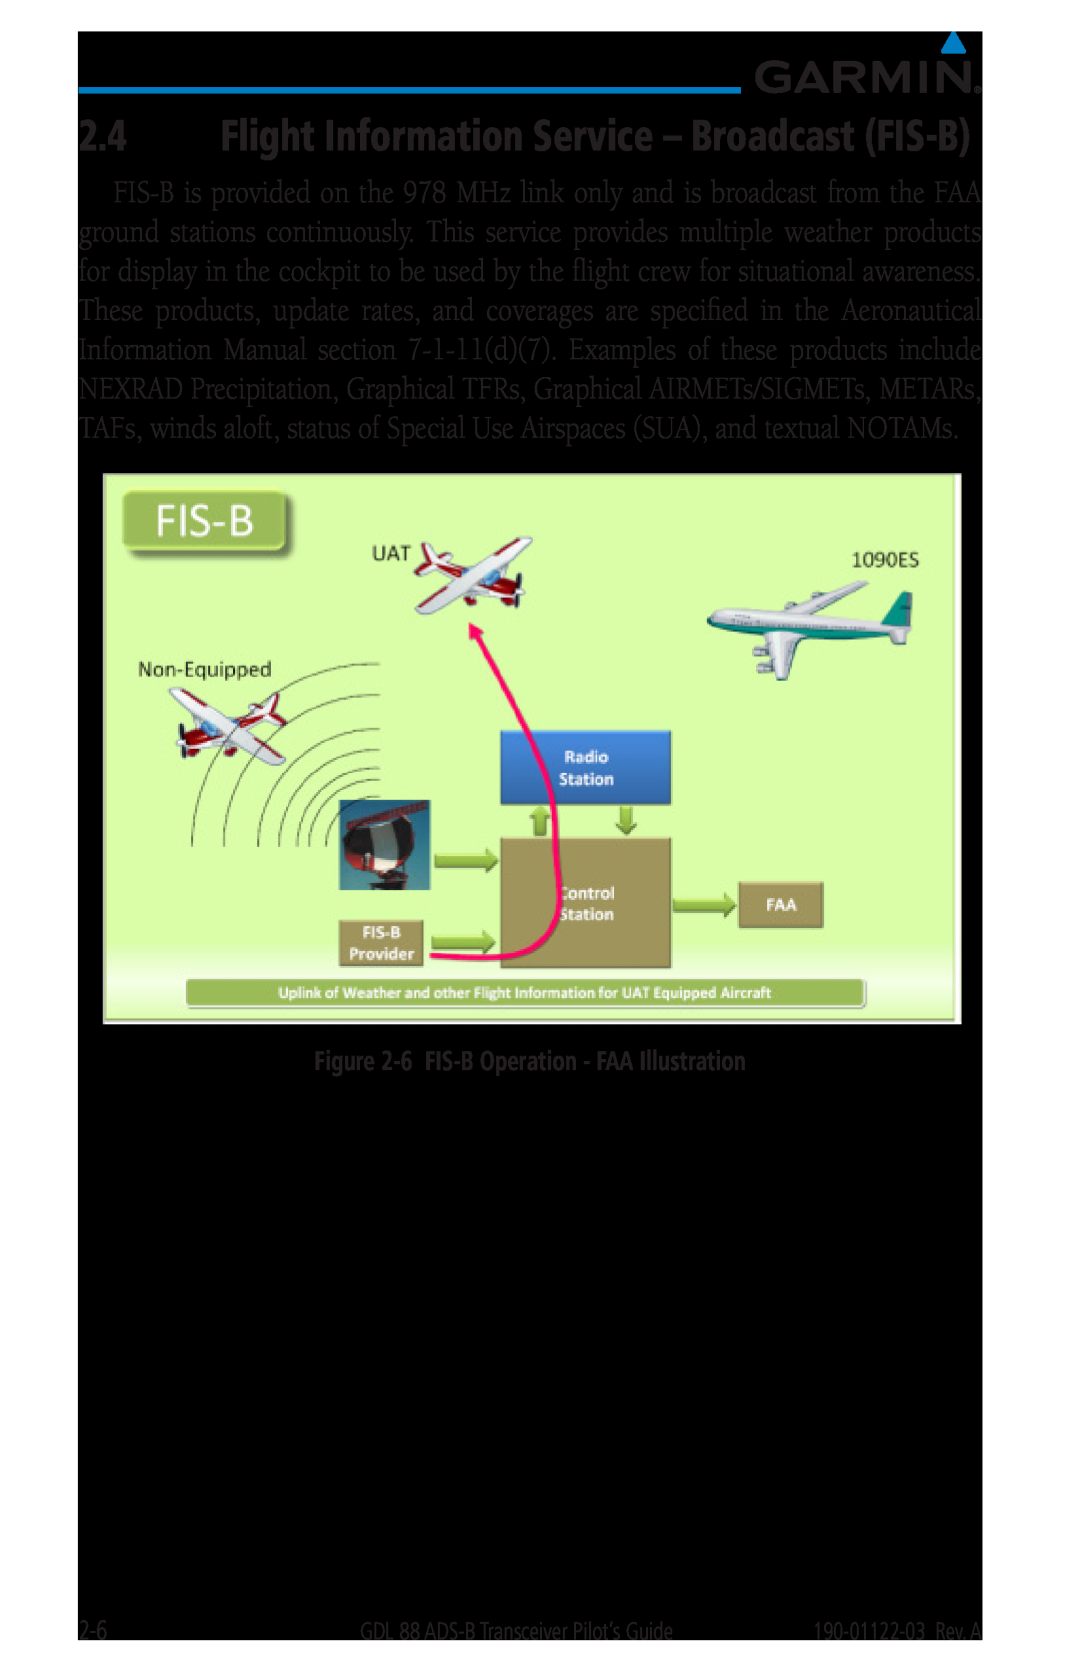 Garmin GDL 88 manual Flight Information Service - Broadcast FIS-B, 6 FIS-B Operation - FAA Illustration 